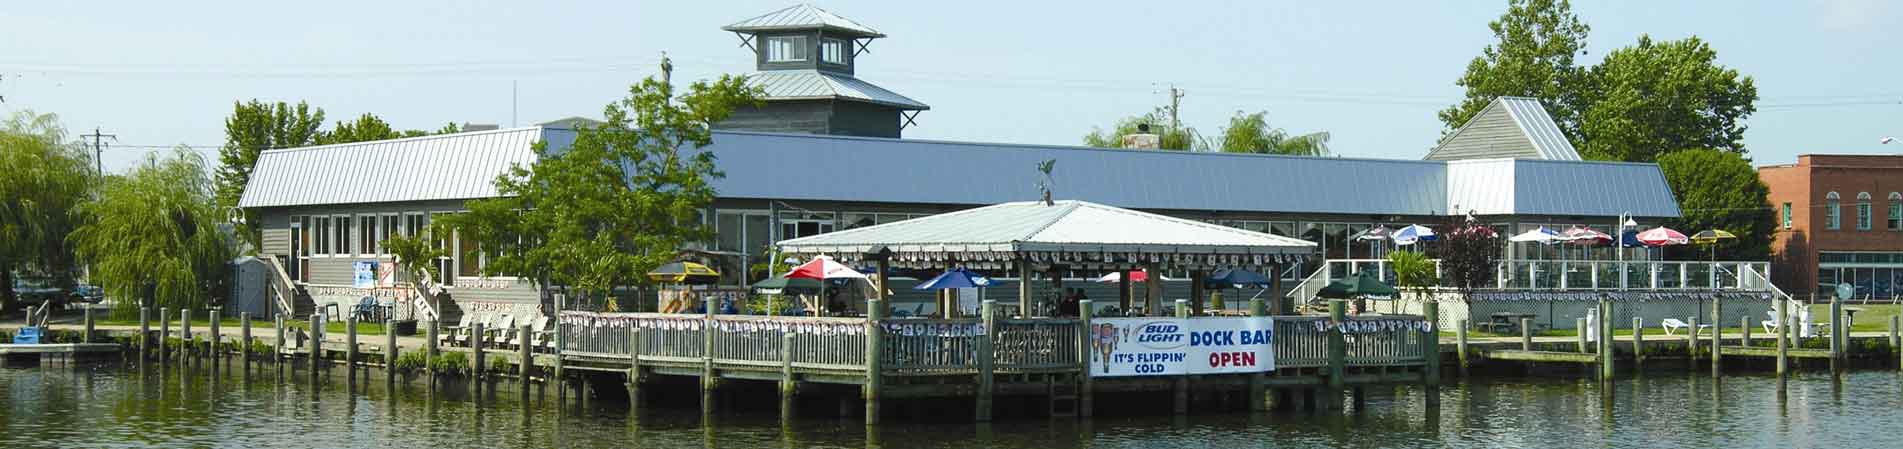 exterior of brew river restaurant